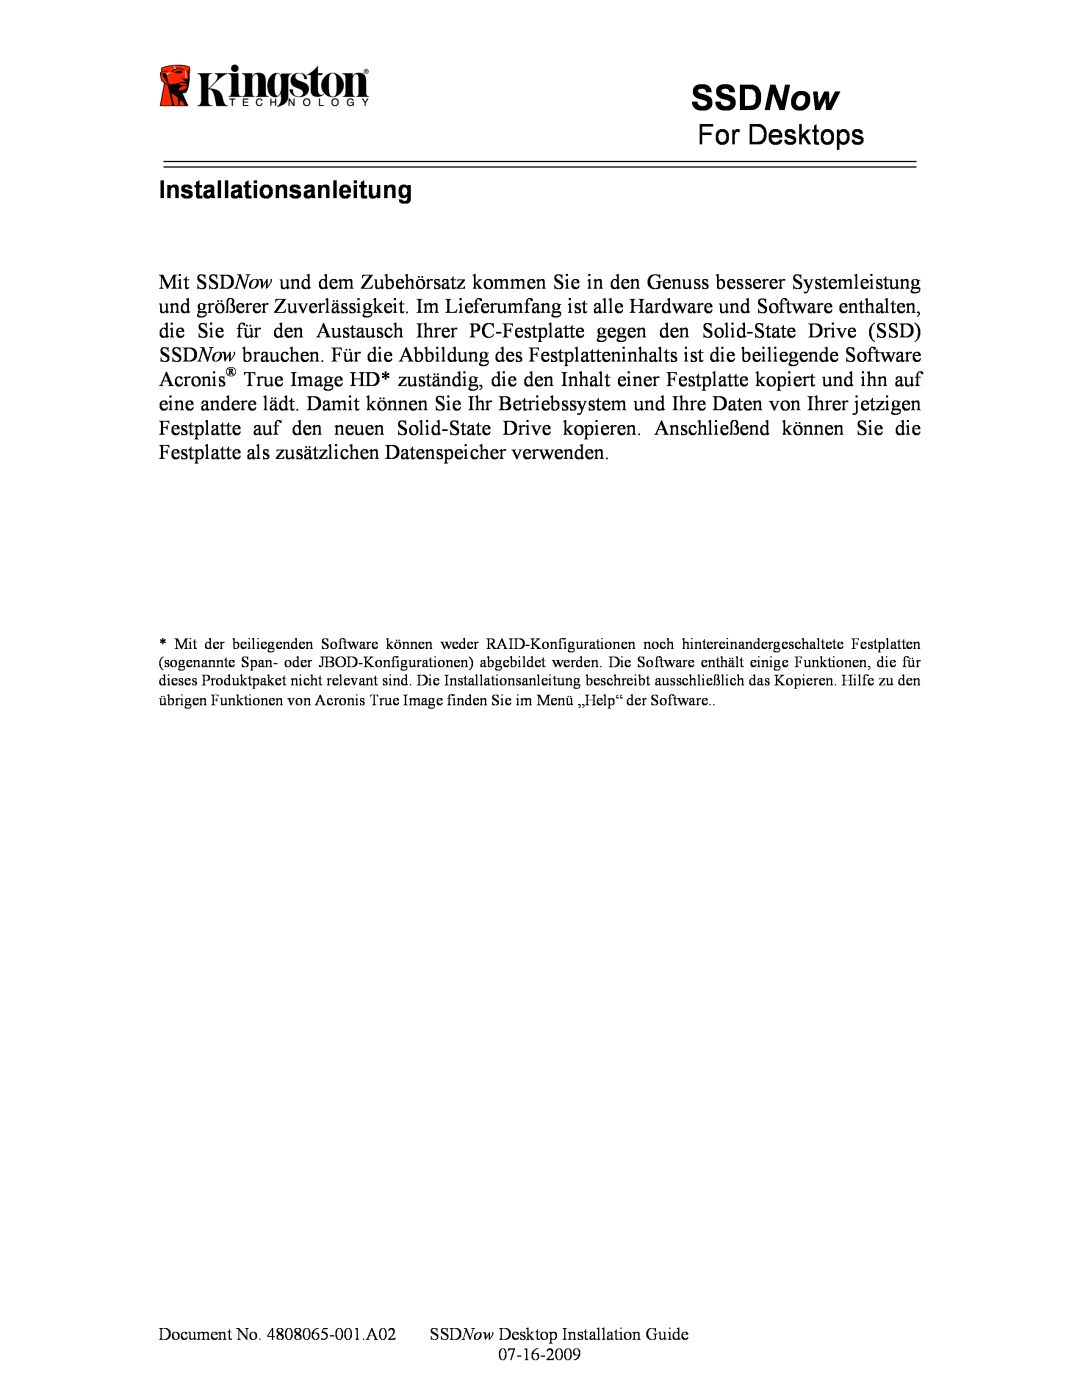 Kingston Technology 07-16-2009 manual Installationsanleitung, SSDNow, For Desktops 